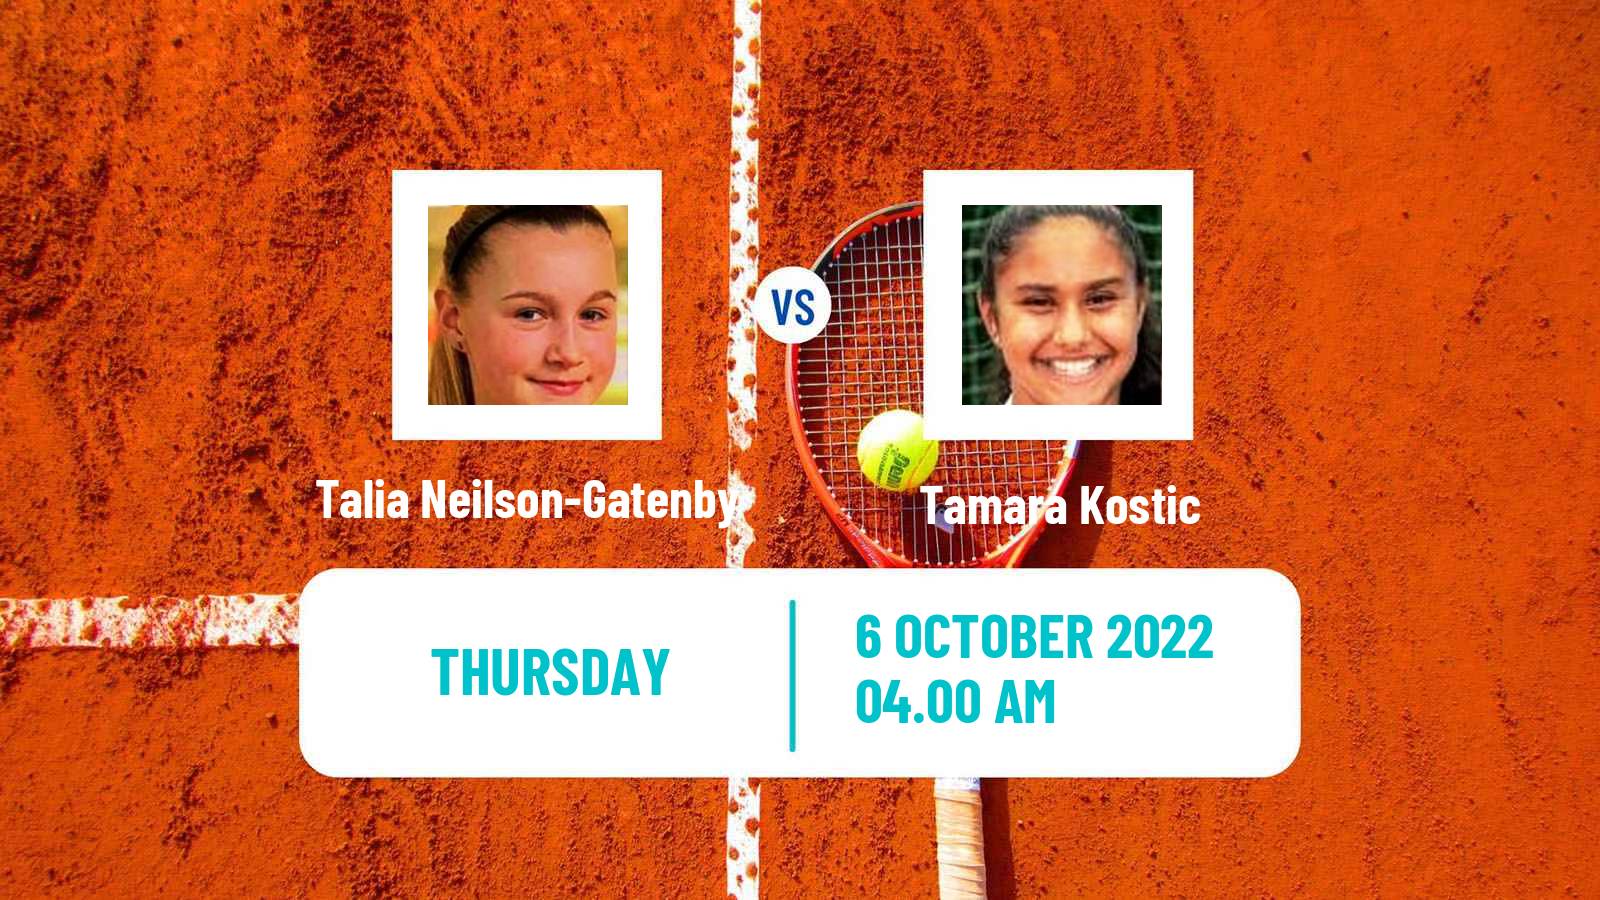 Tennis ITF Tournaments Talia Neilson-Gatenby - Tamara Kostic